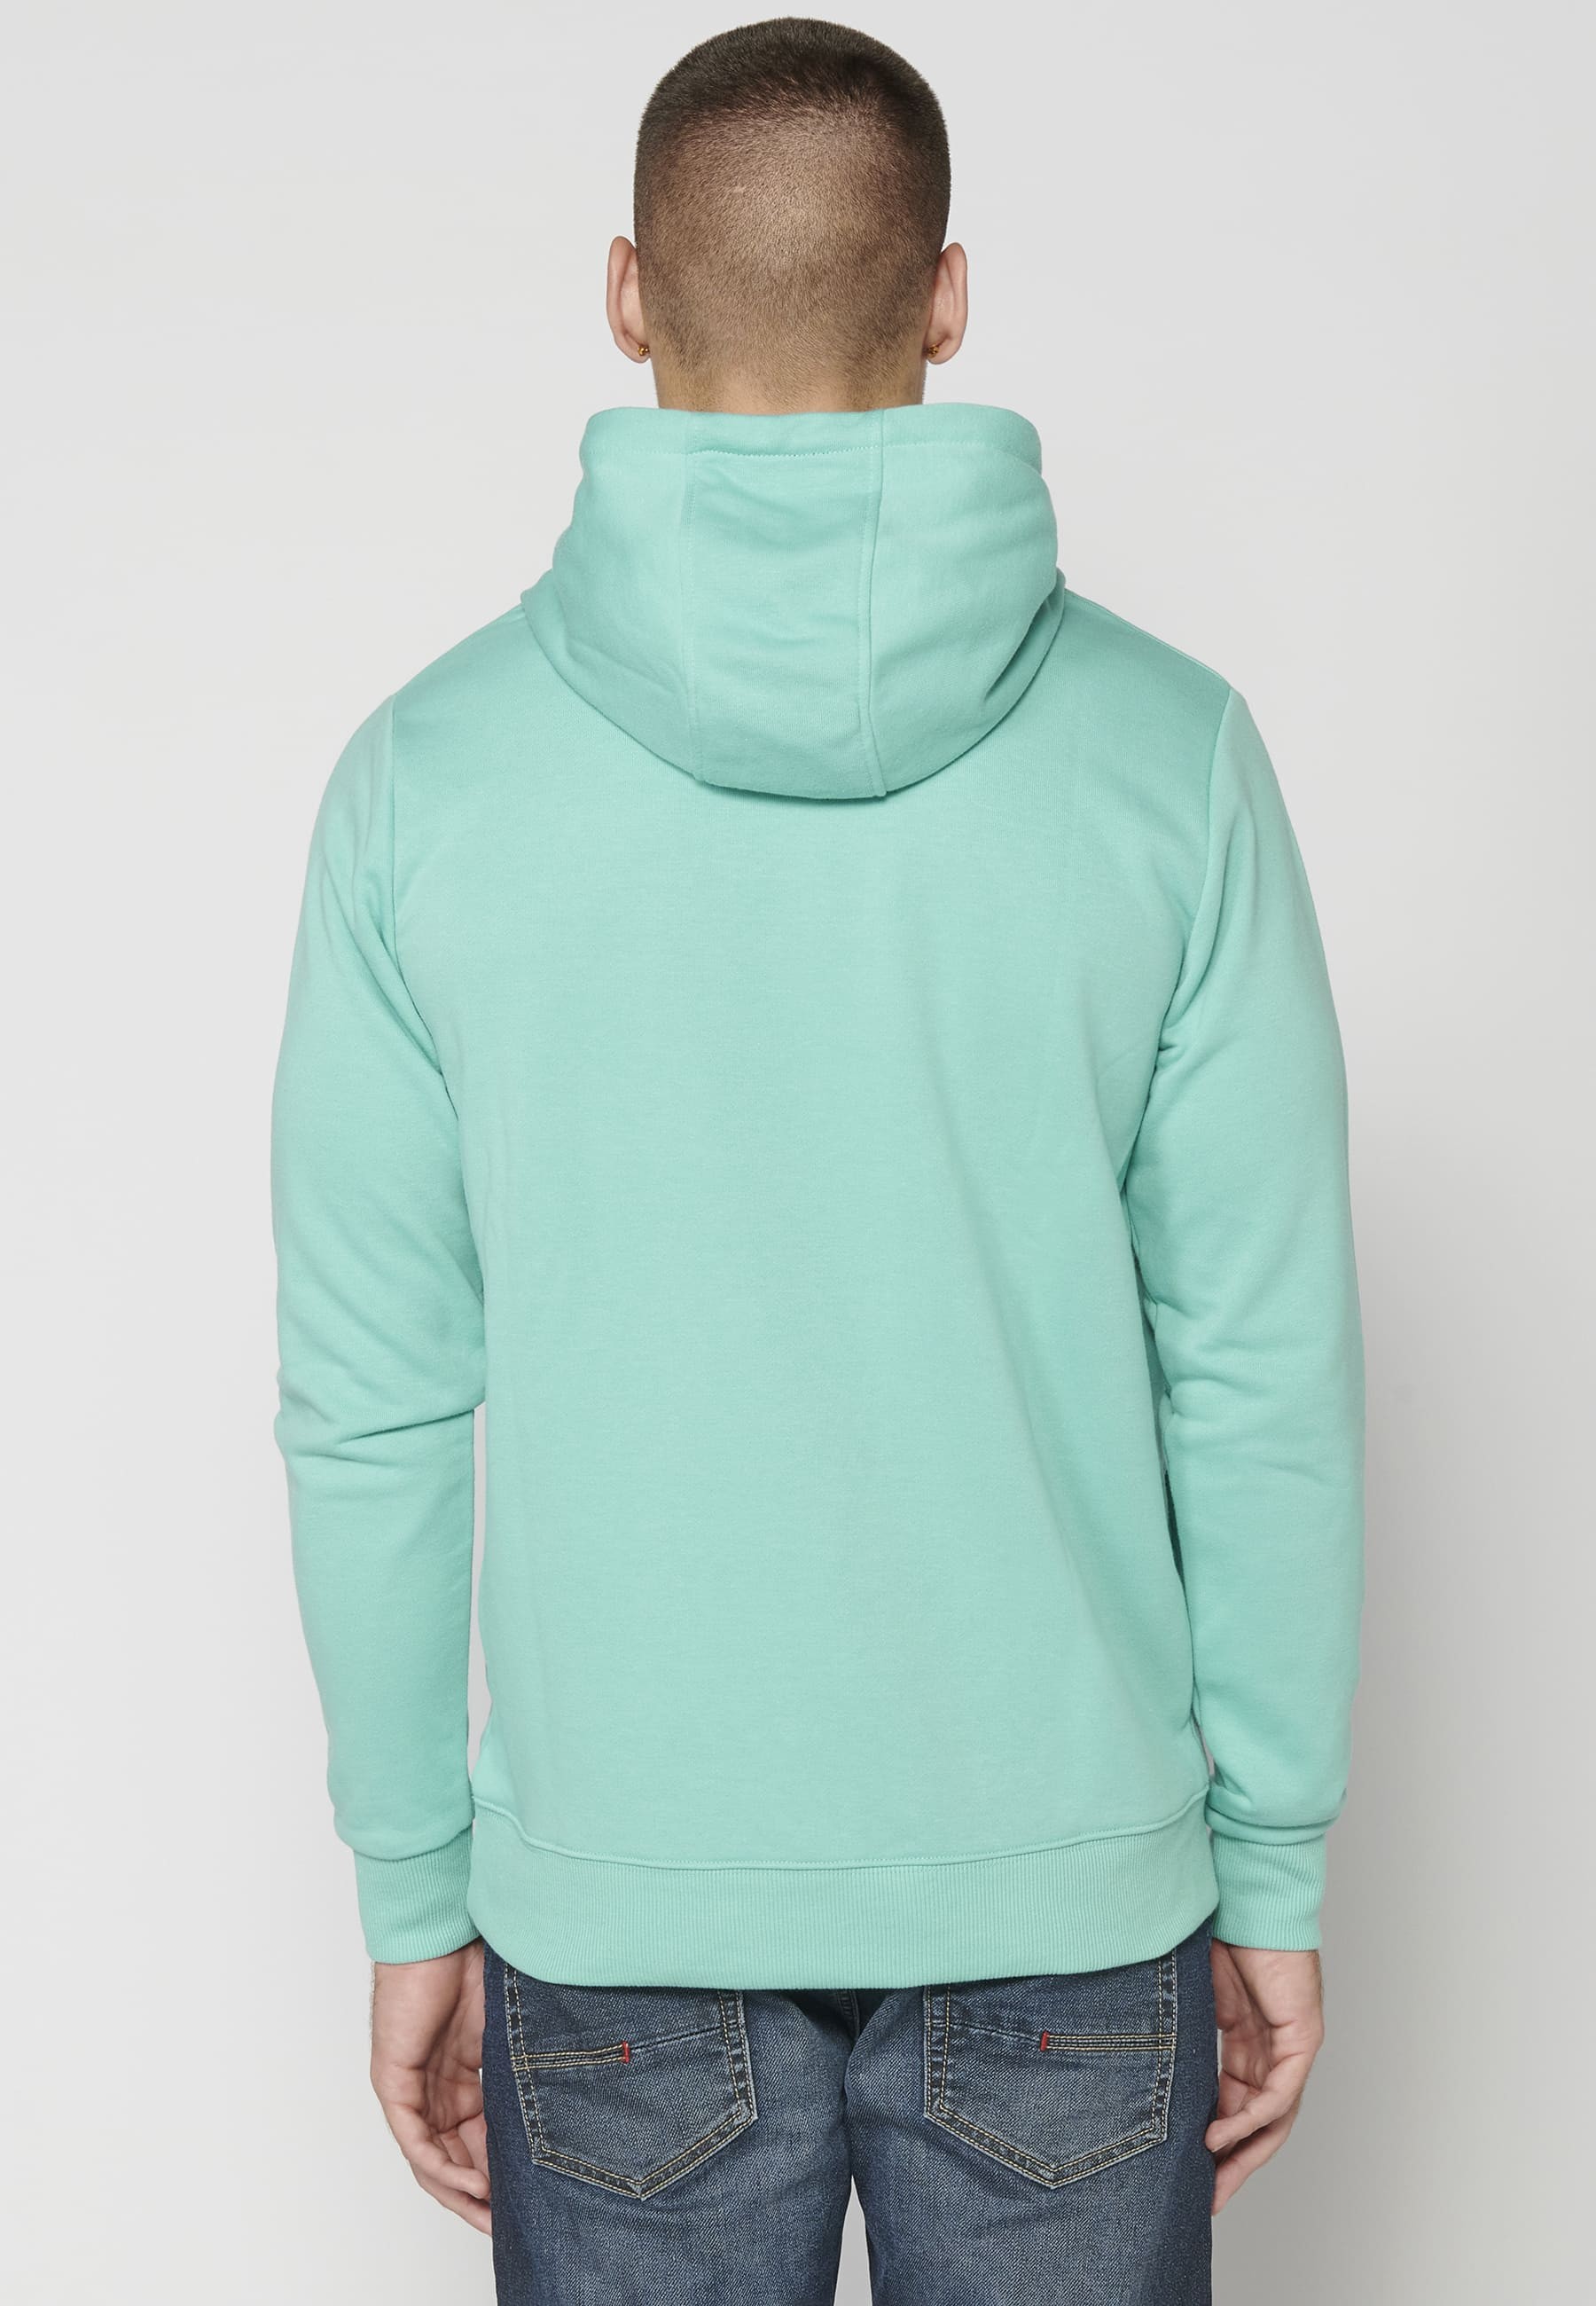 Men's Mint Color Long Sleeve Hooded Sweatshirt